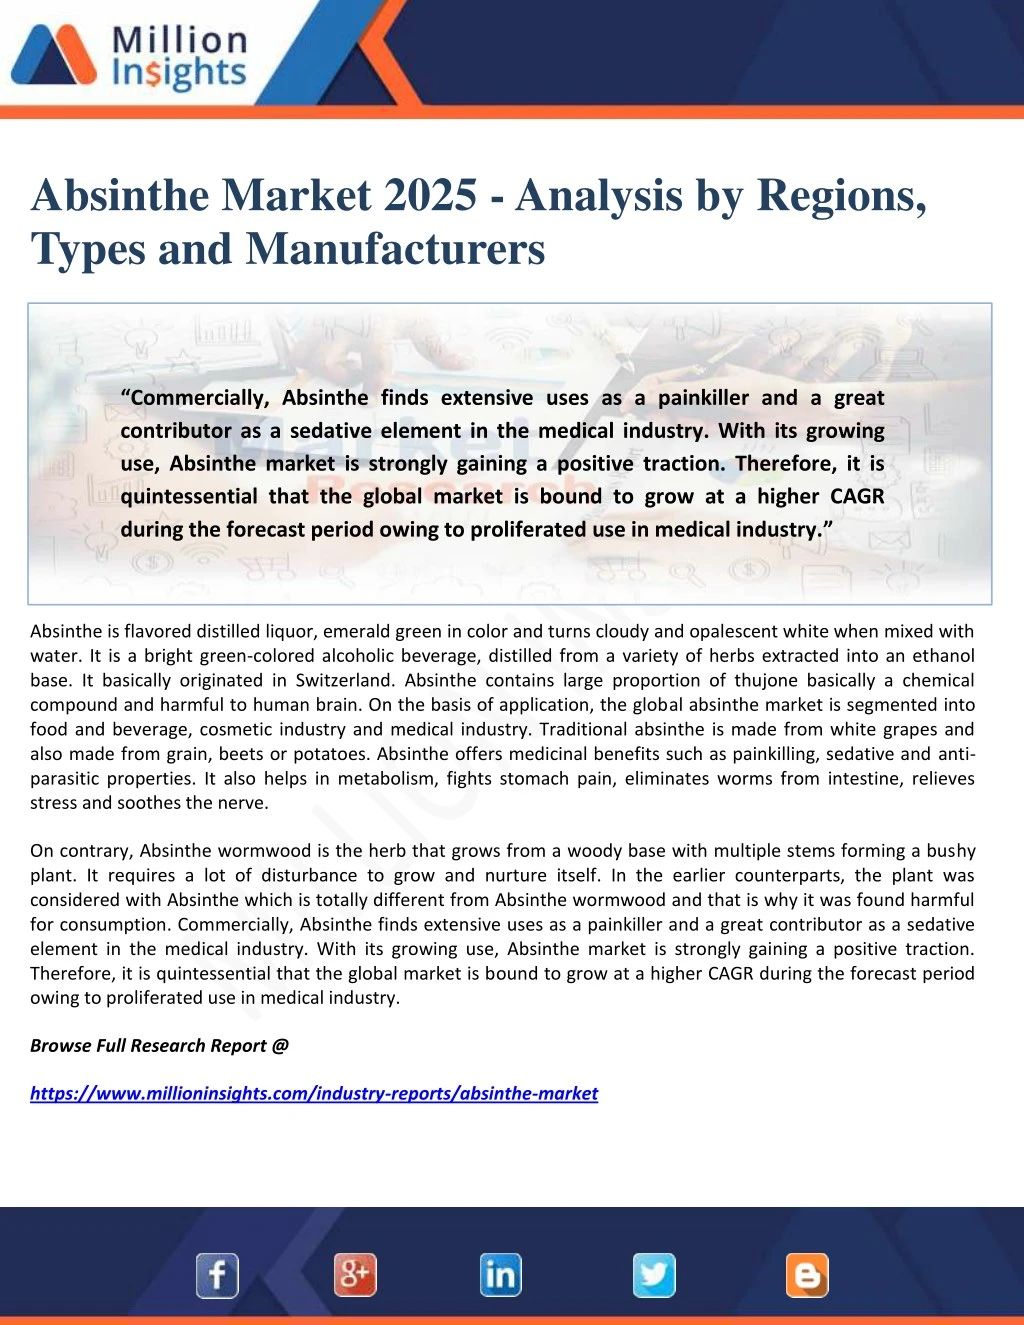 absinthe market 2025 analysis by regions types